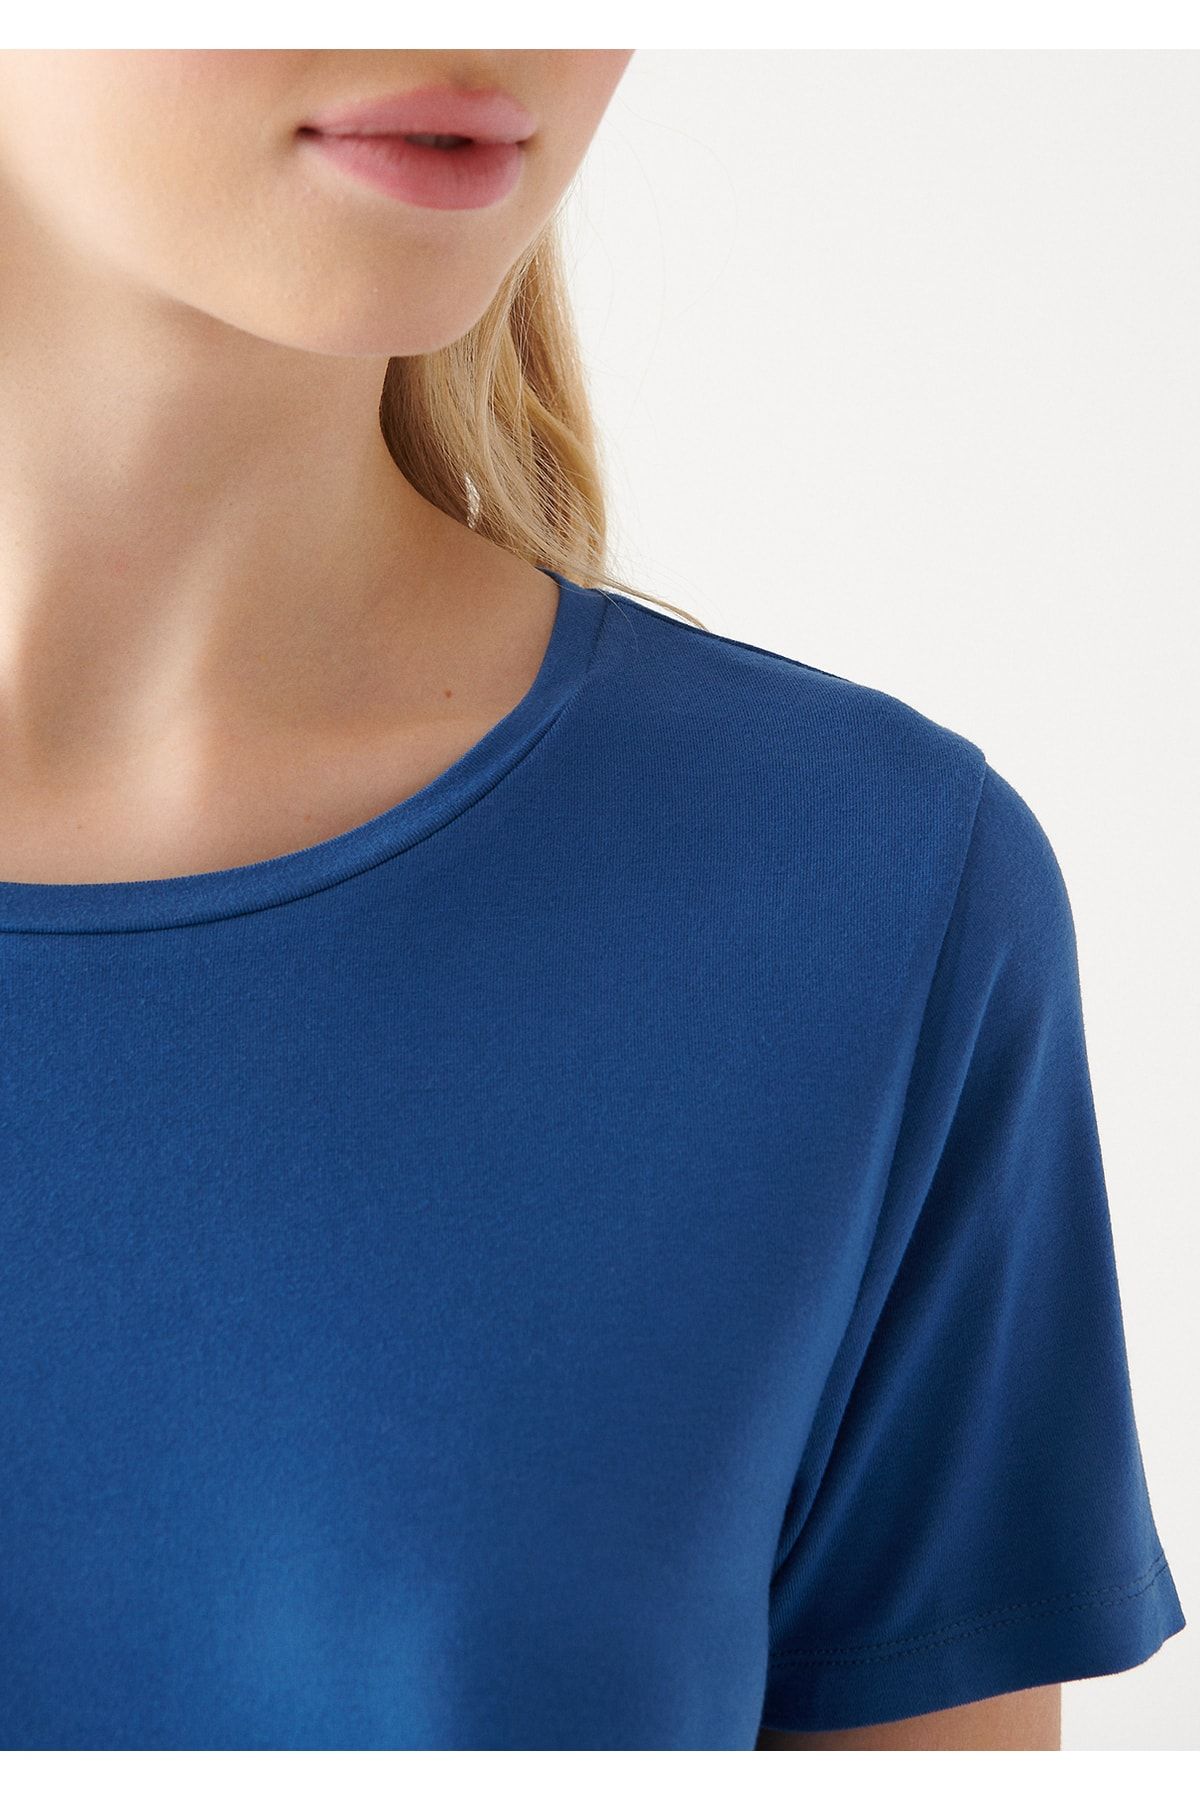 Mavi تی شرت پایه یقه خدمه با تناسب معمولی / برش 1610634-70719